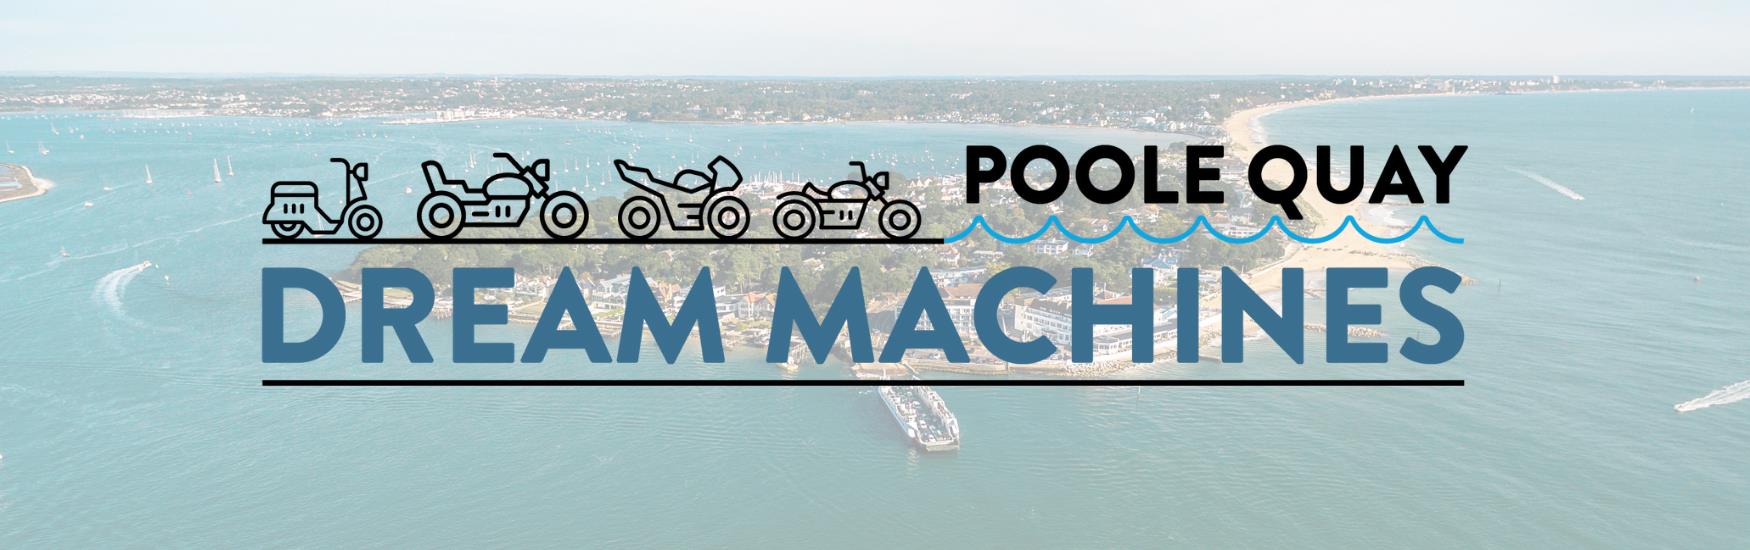 Poole dream machines logo above sandbanks photo